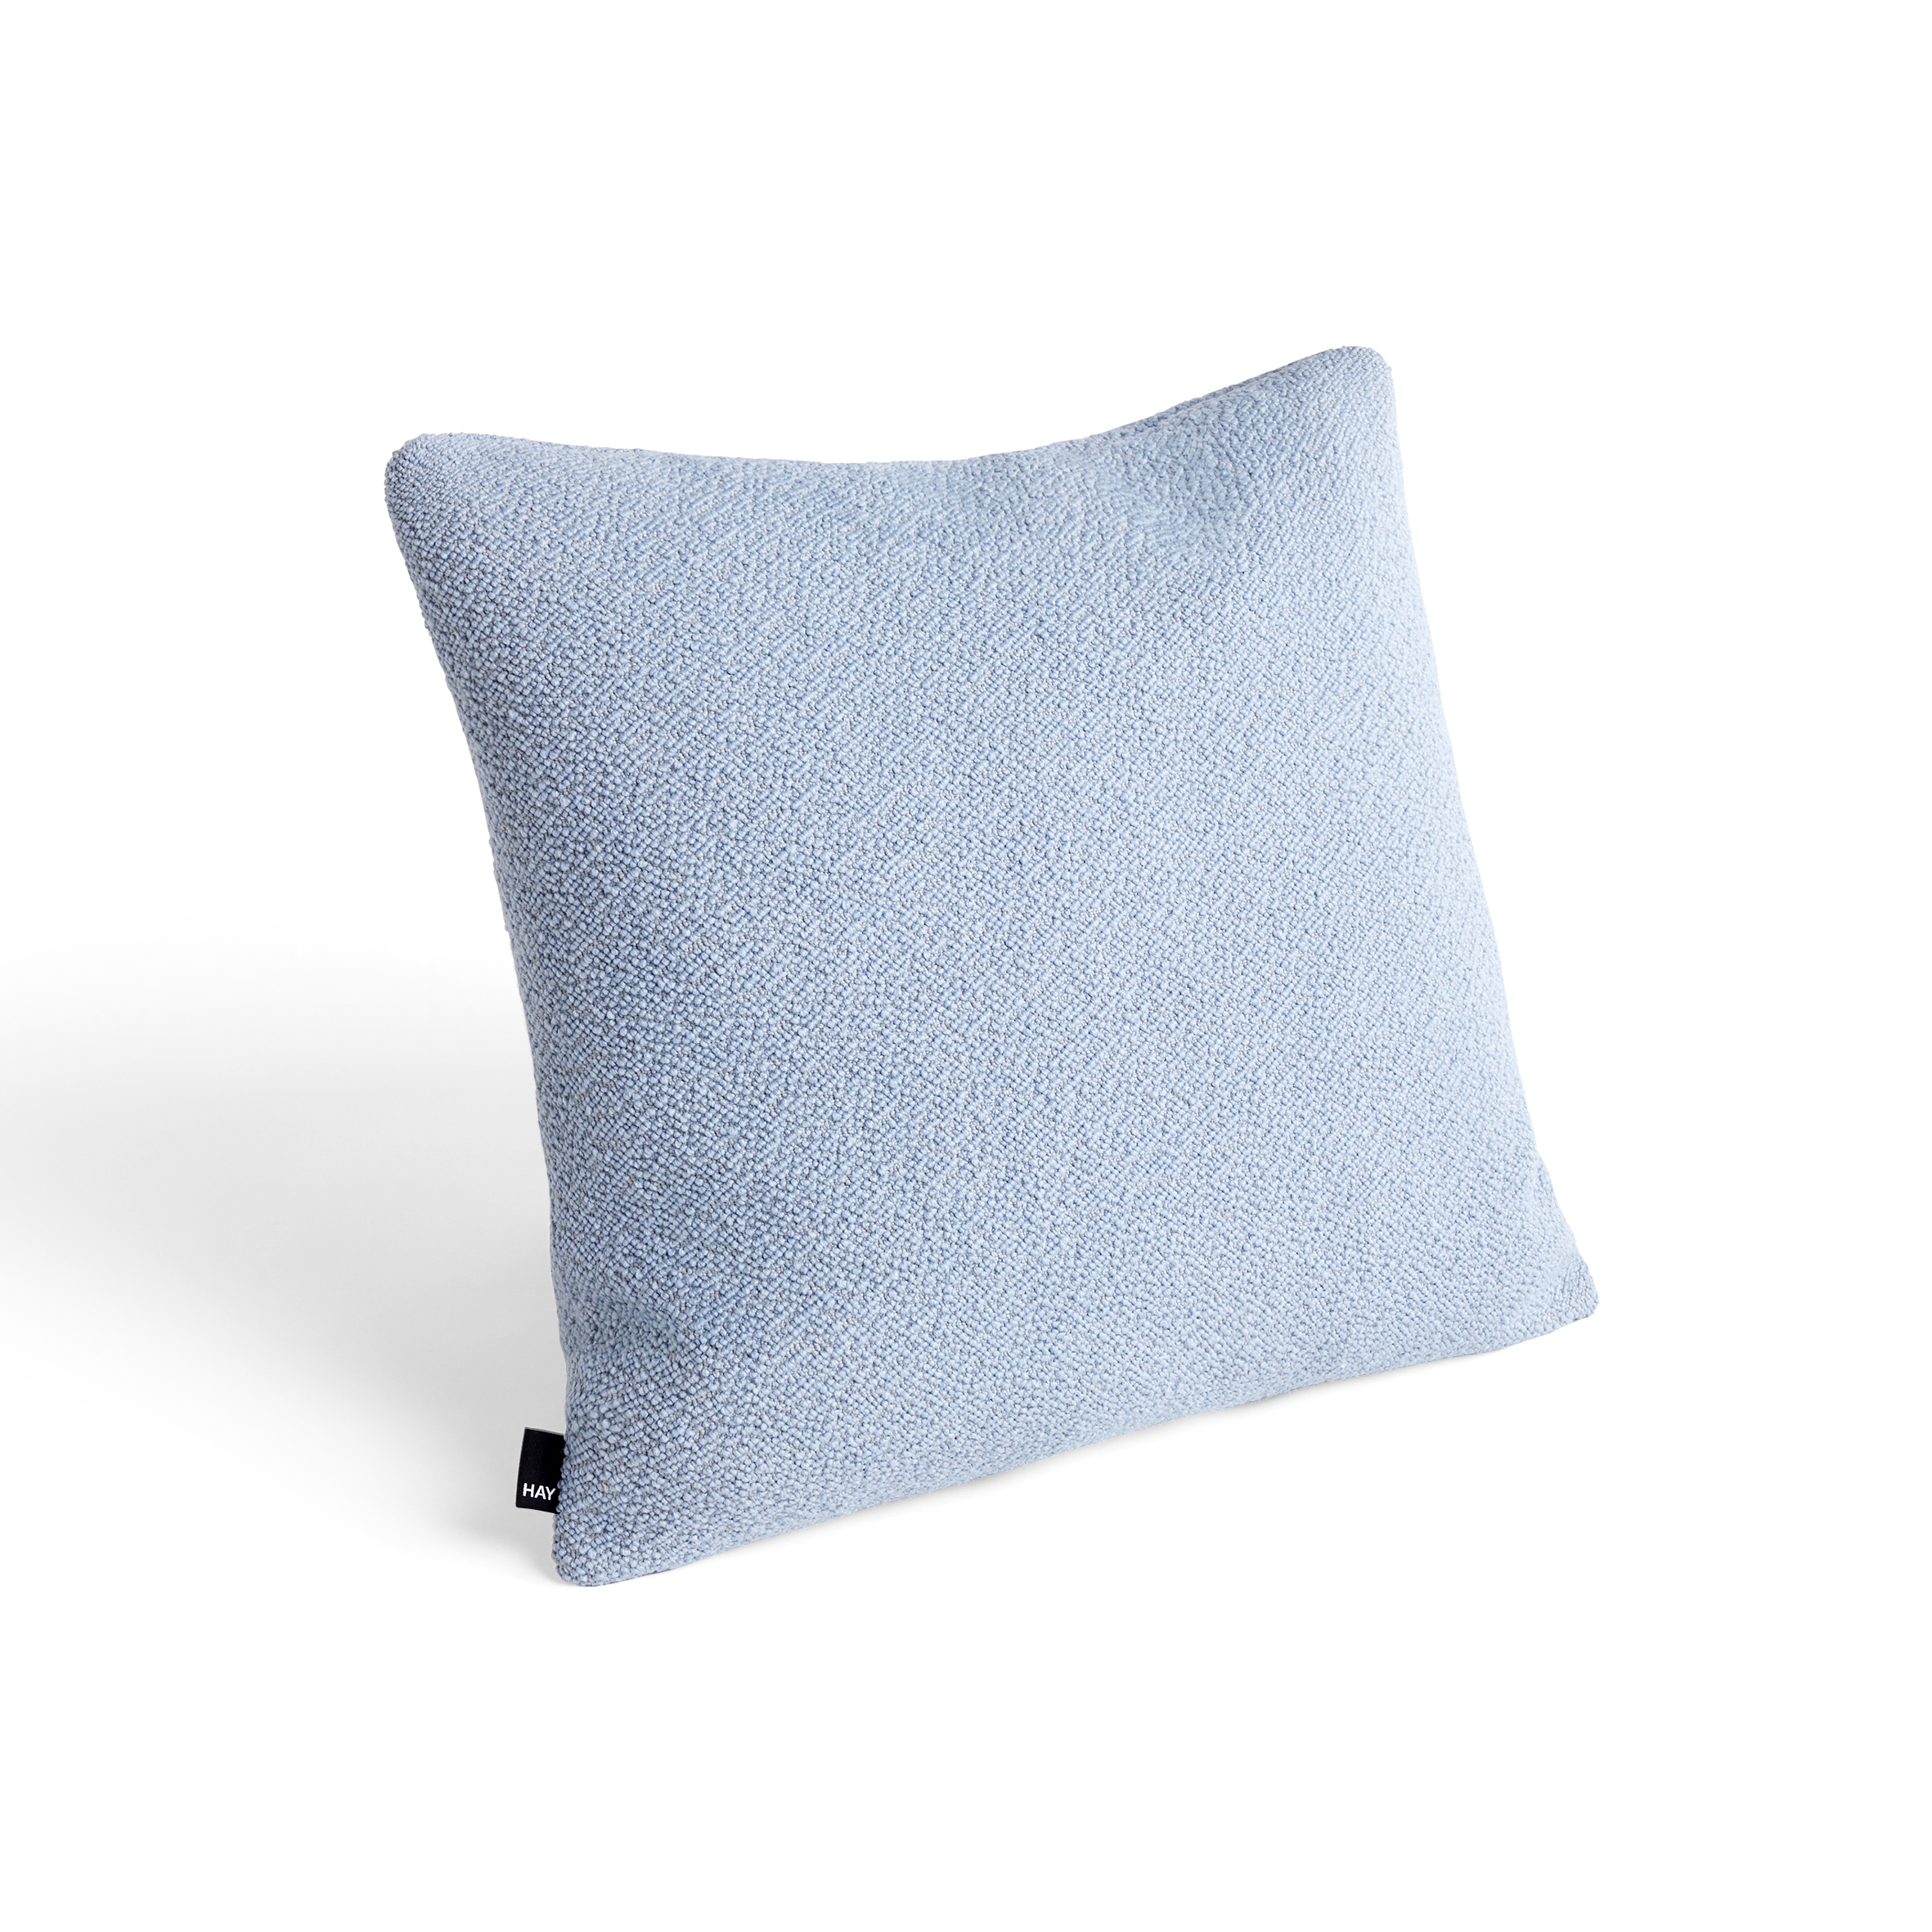 Texture cushion - Ice Blue